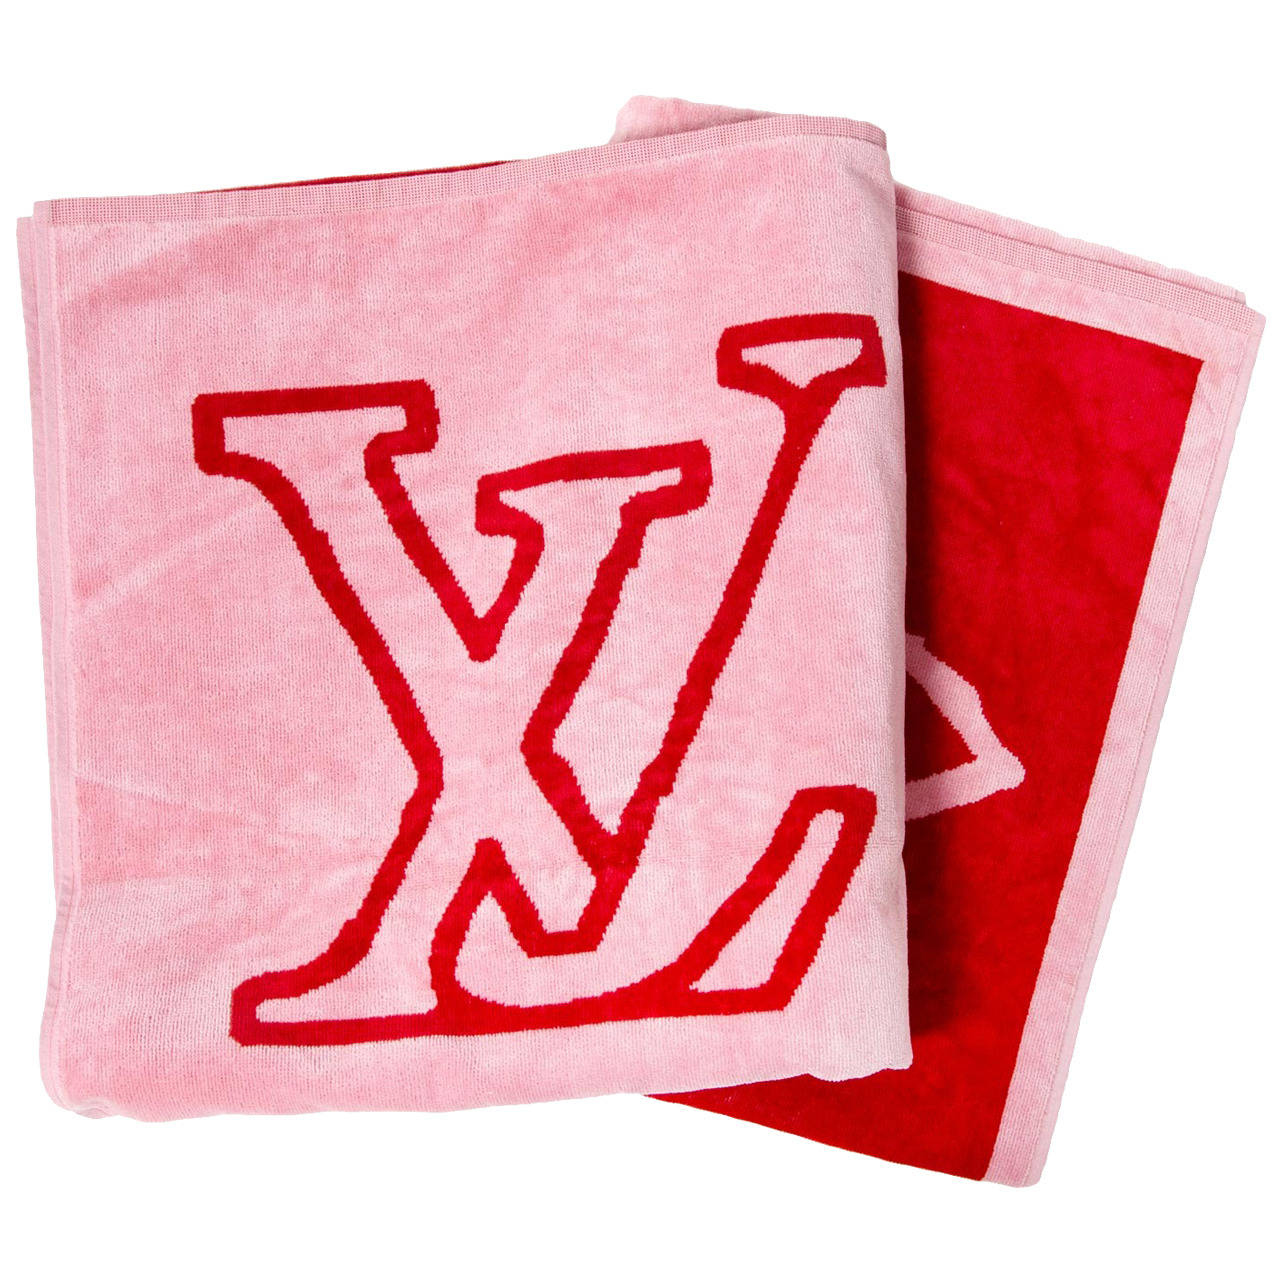 Louis Vuitton Red Pink Monogram Beach Towel at 1stdibs